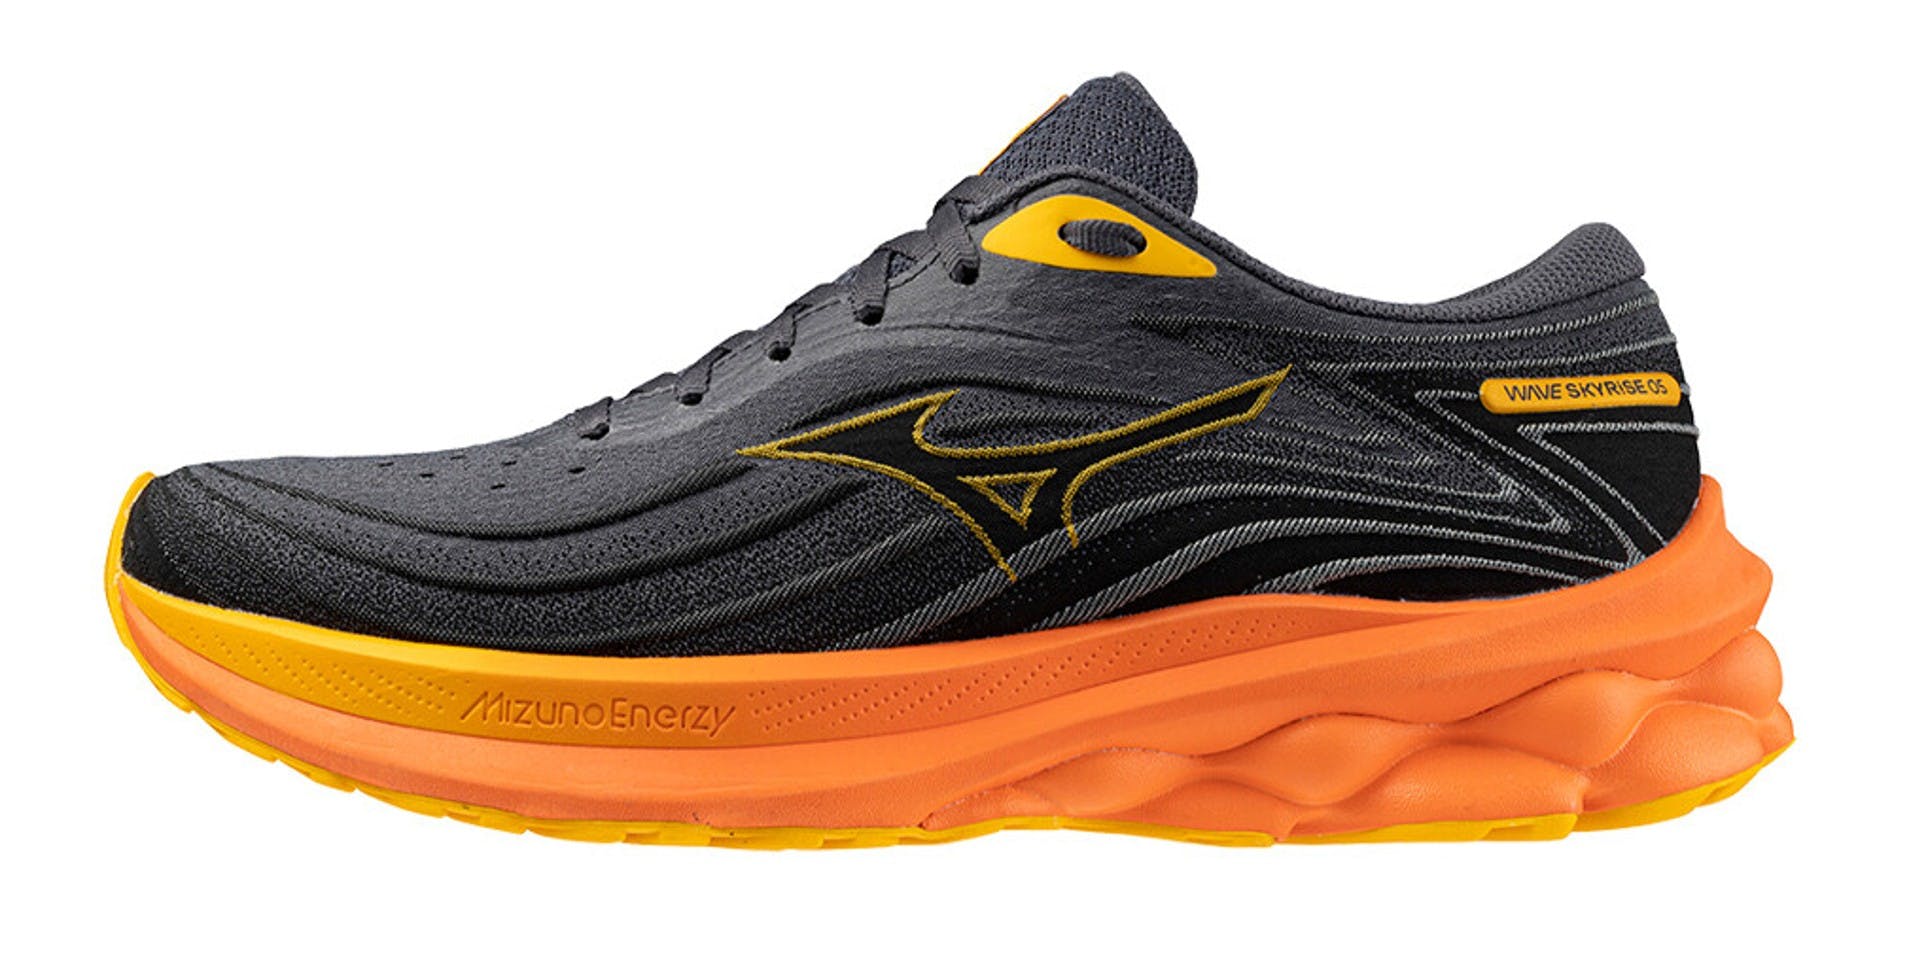 Buy ASICS Men's Gel-Odyssey Black Nordic Walking Shoes-6 UK/India (40 EU)  (7 US) (1131A023.001) at